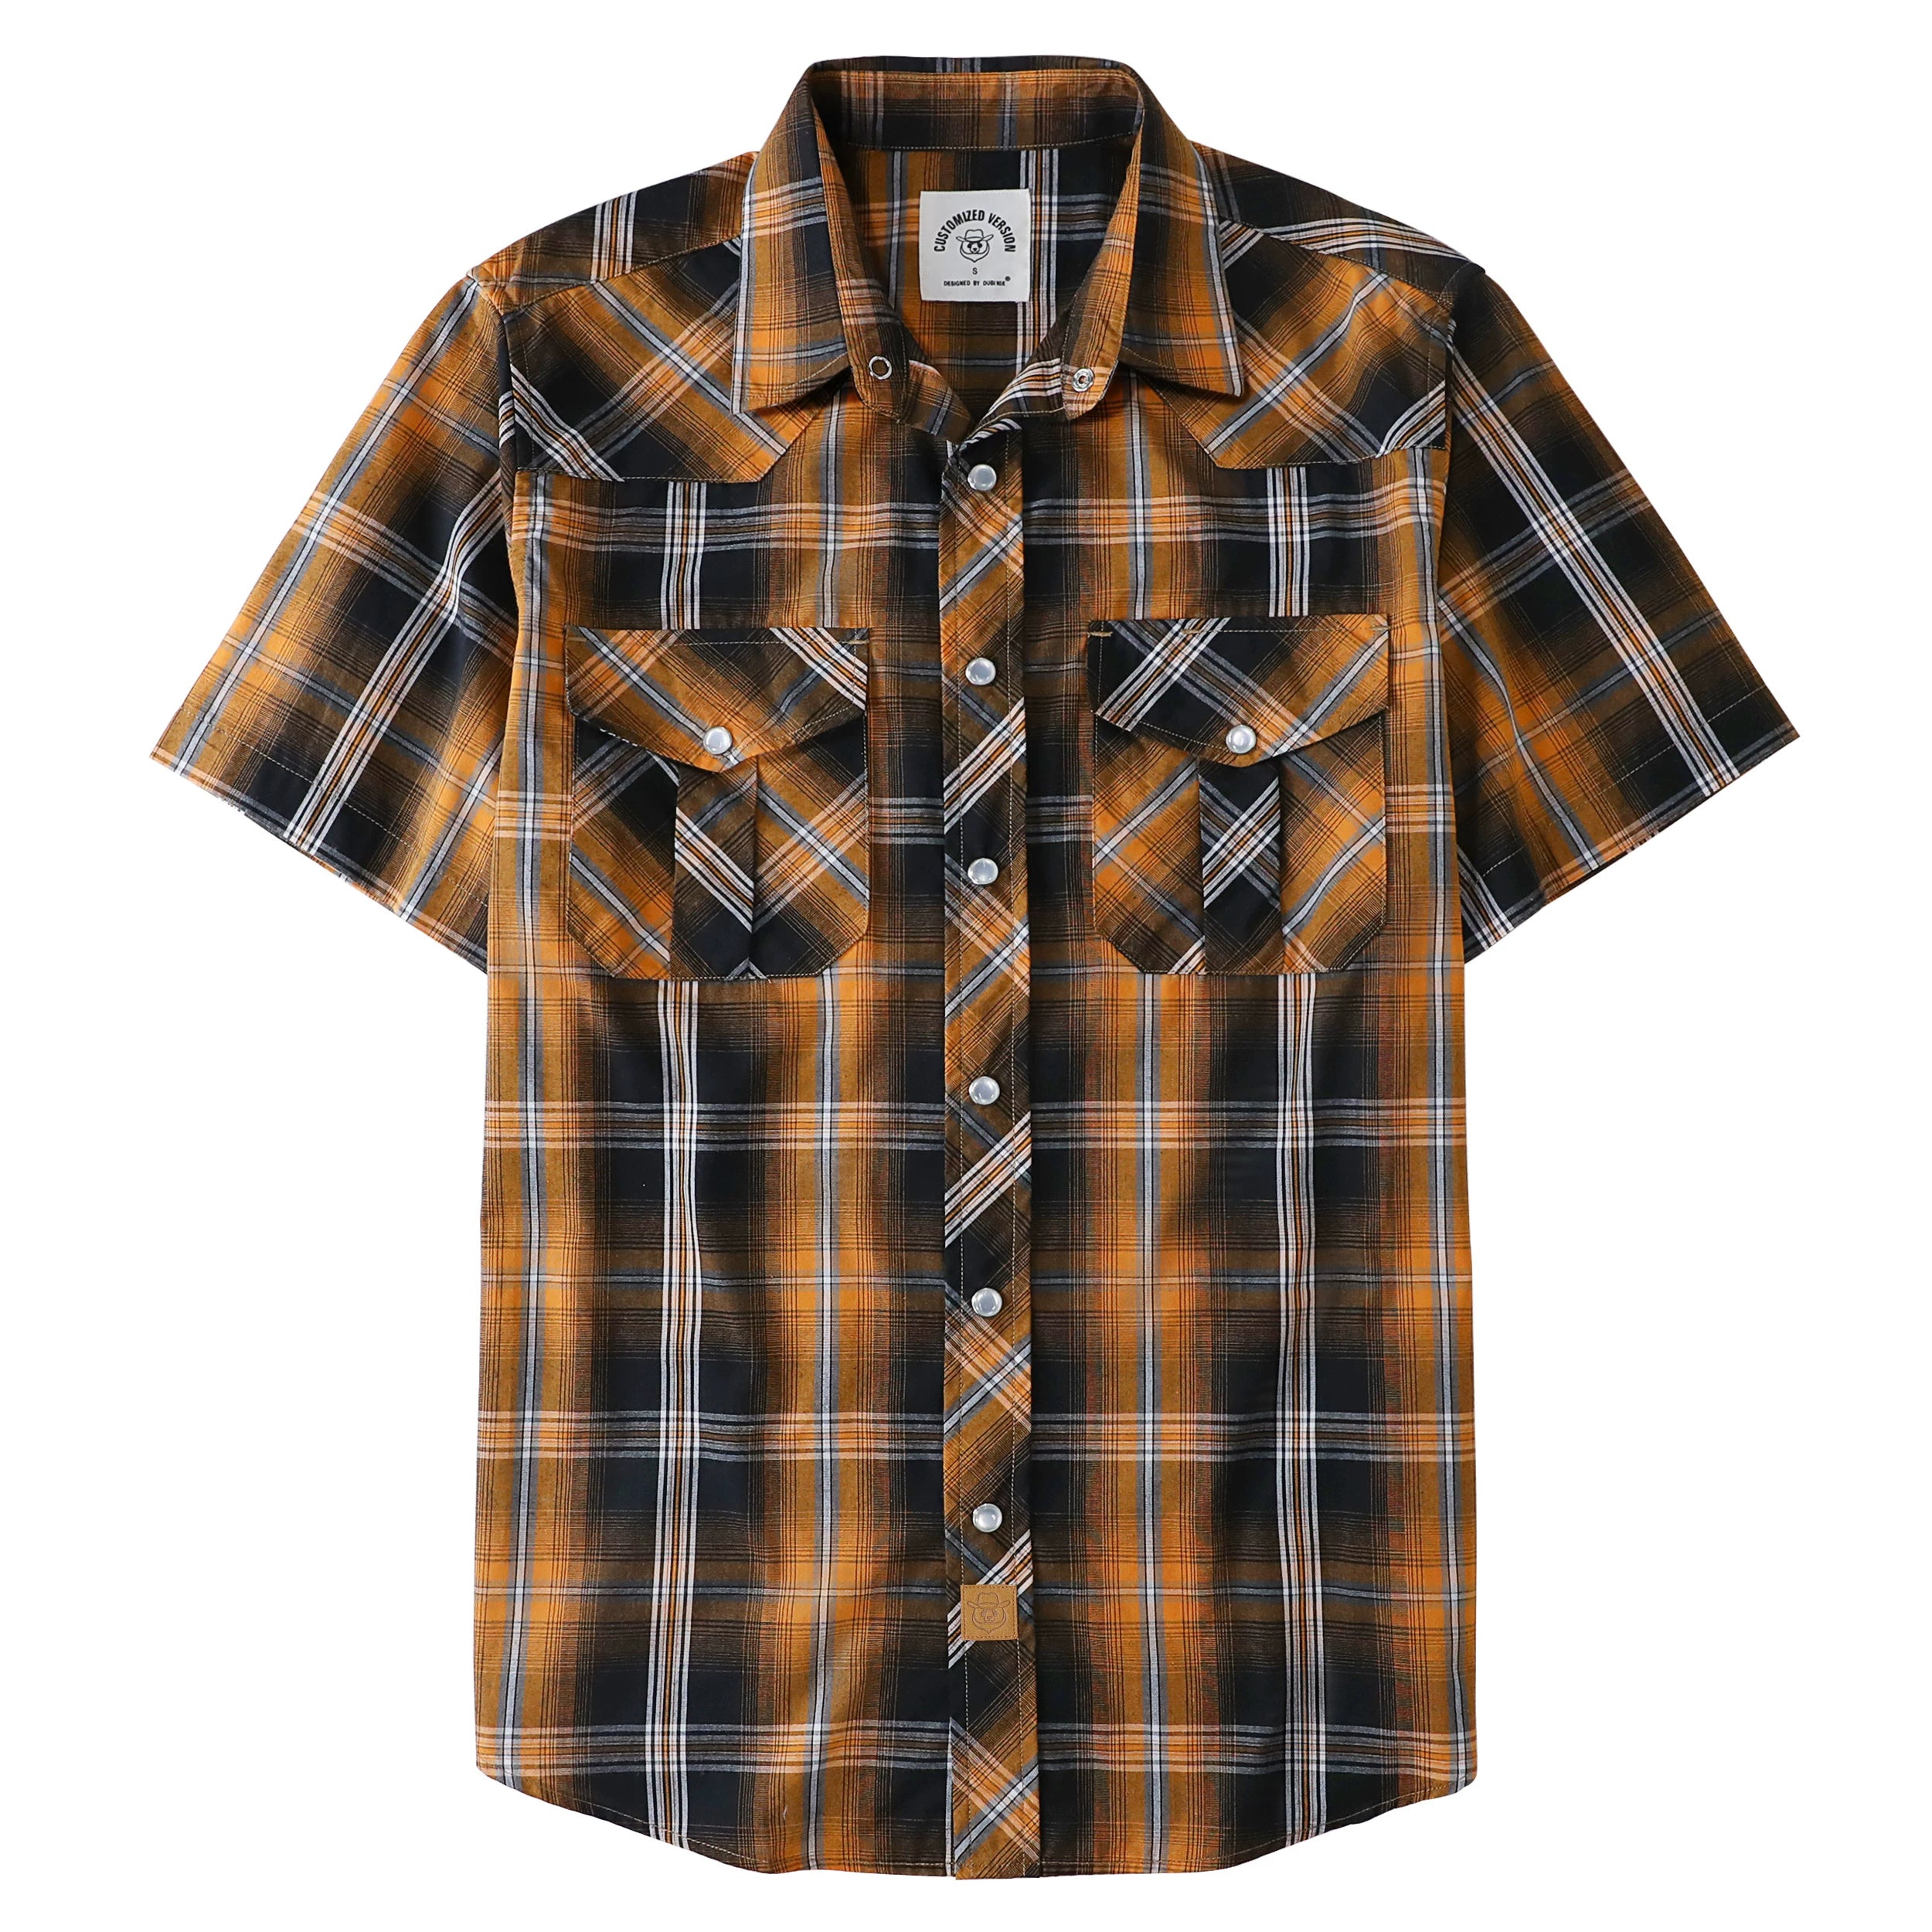 Dubinik® Western Shirts for Men Short Sleeve Plaid Pearl Snap Shirts for Men Button Up Shirt Cowboy Casual Work Shirt#41005